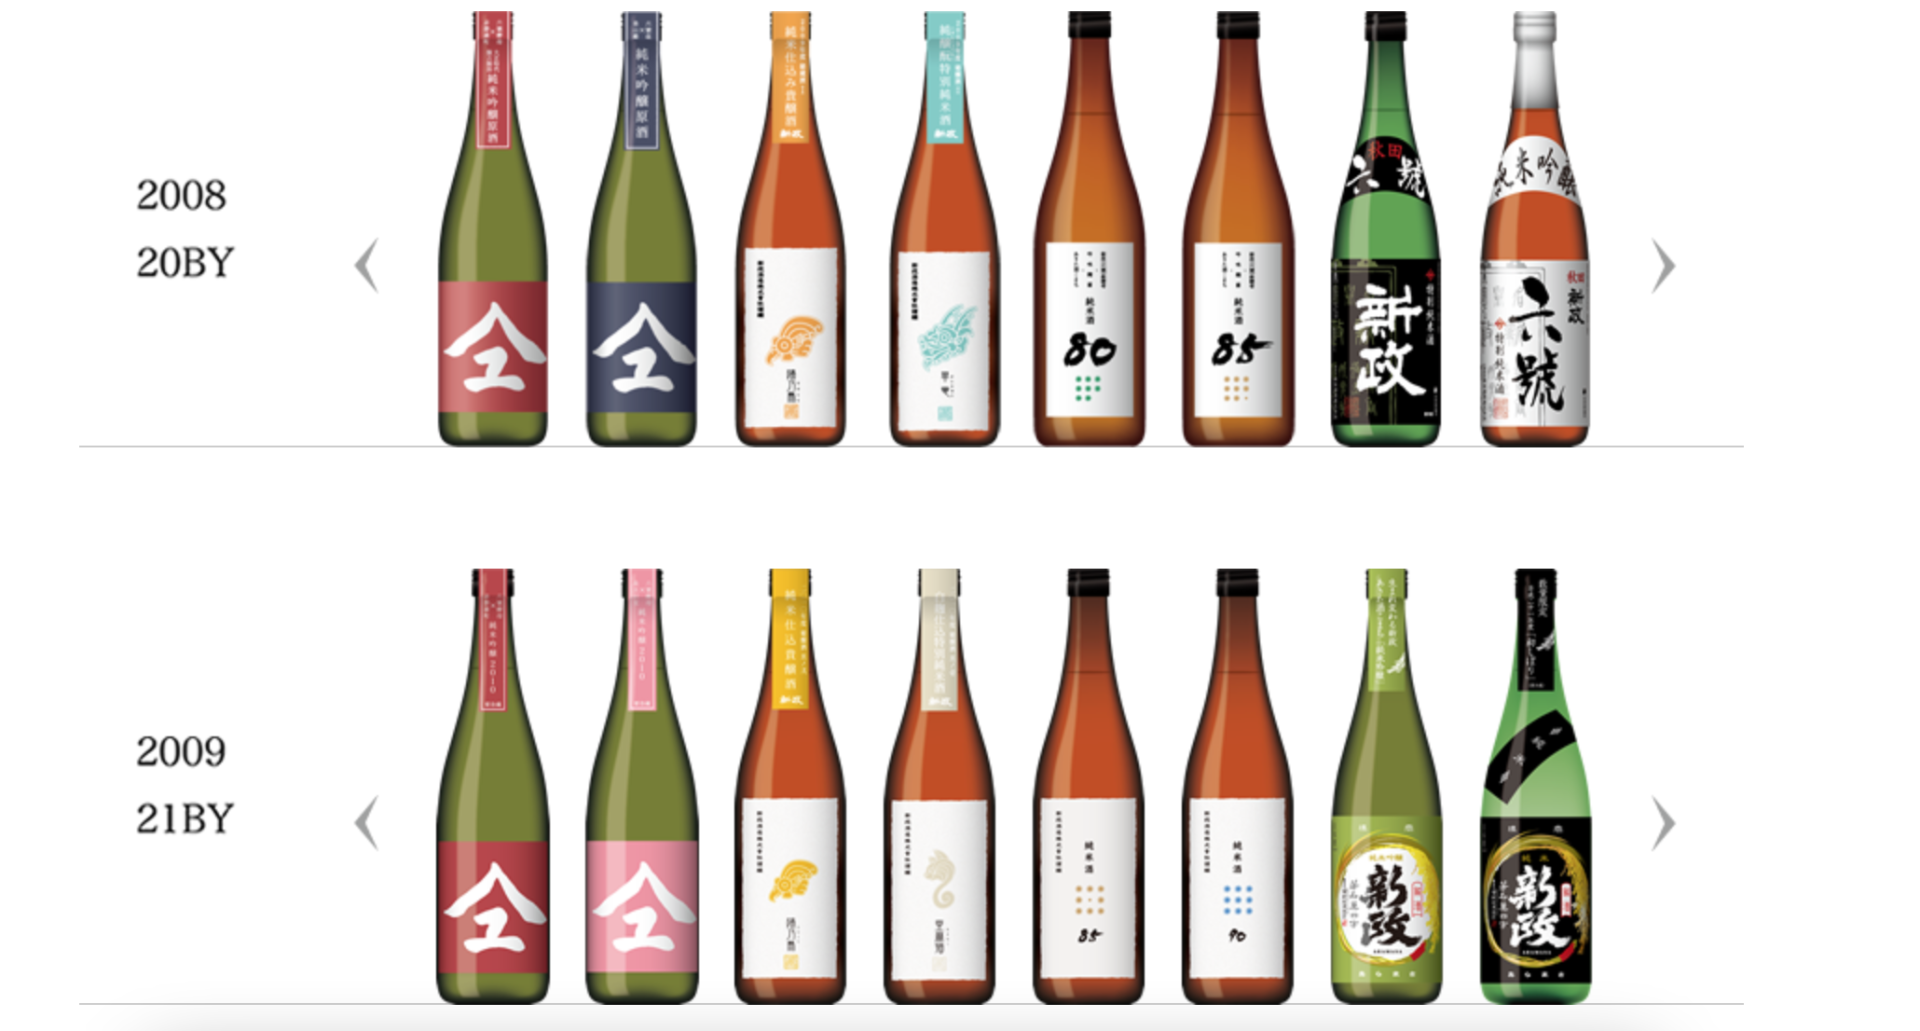 What kind of sake brand is Aramasa?